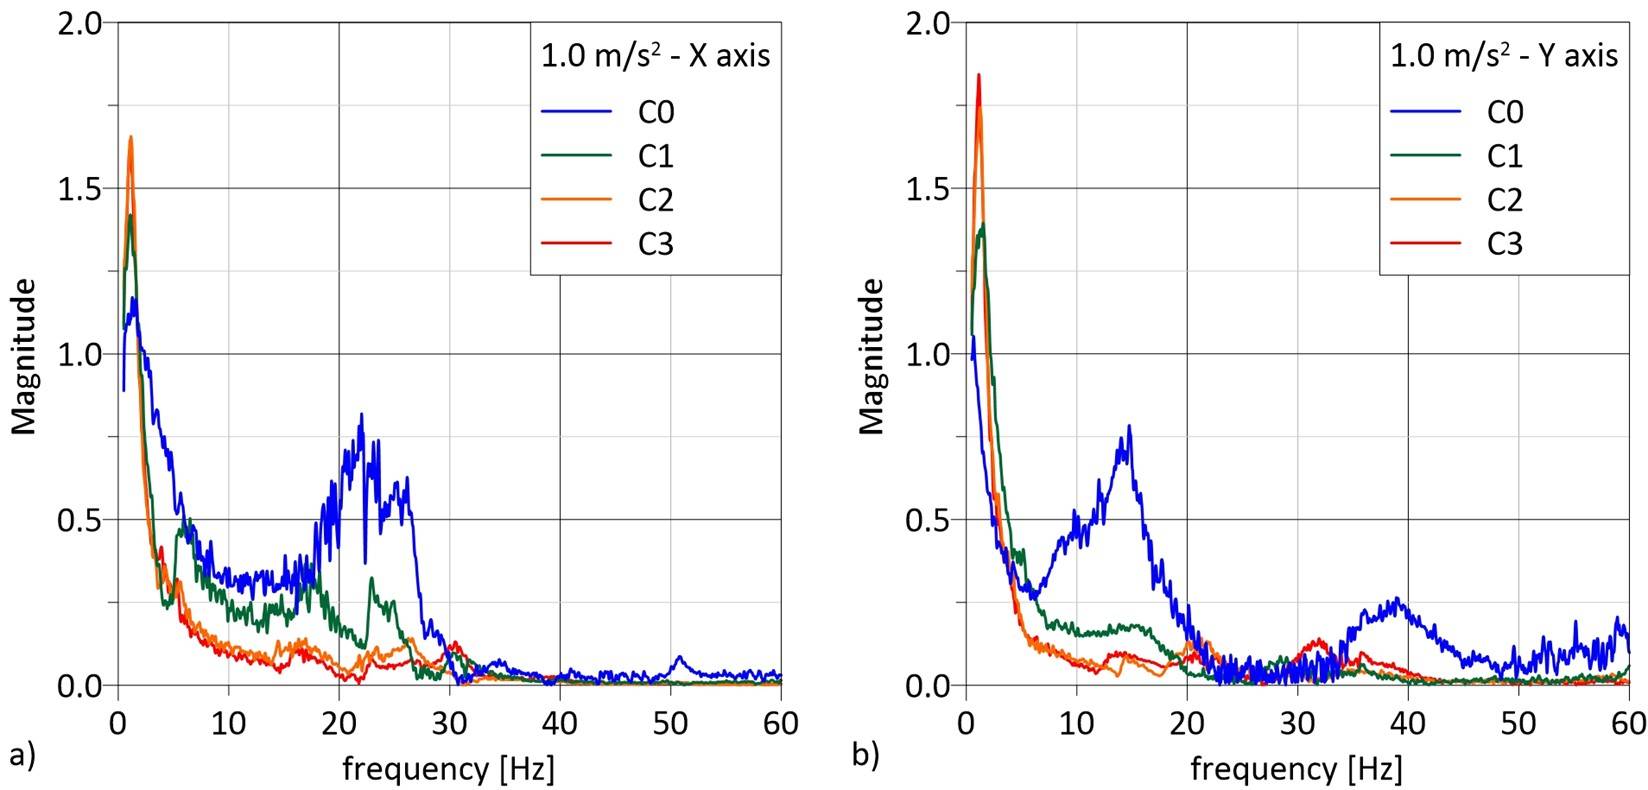 Figura 2. – Funzioni di Risposta in frequenza per test con rumore casuale a 1.0 m/s2 RMS: a) direzione X; b) direzione Y.